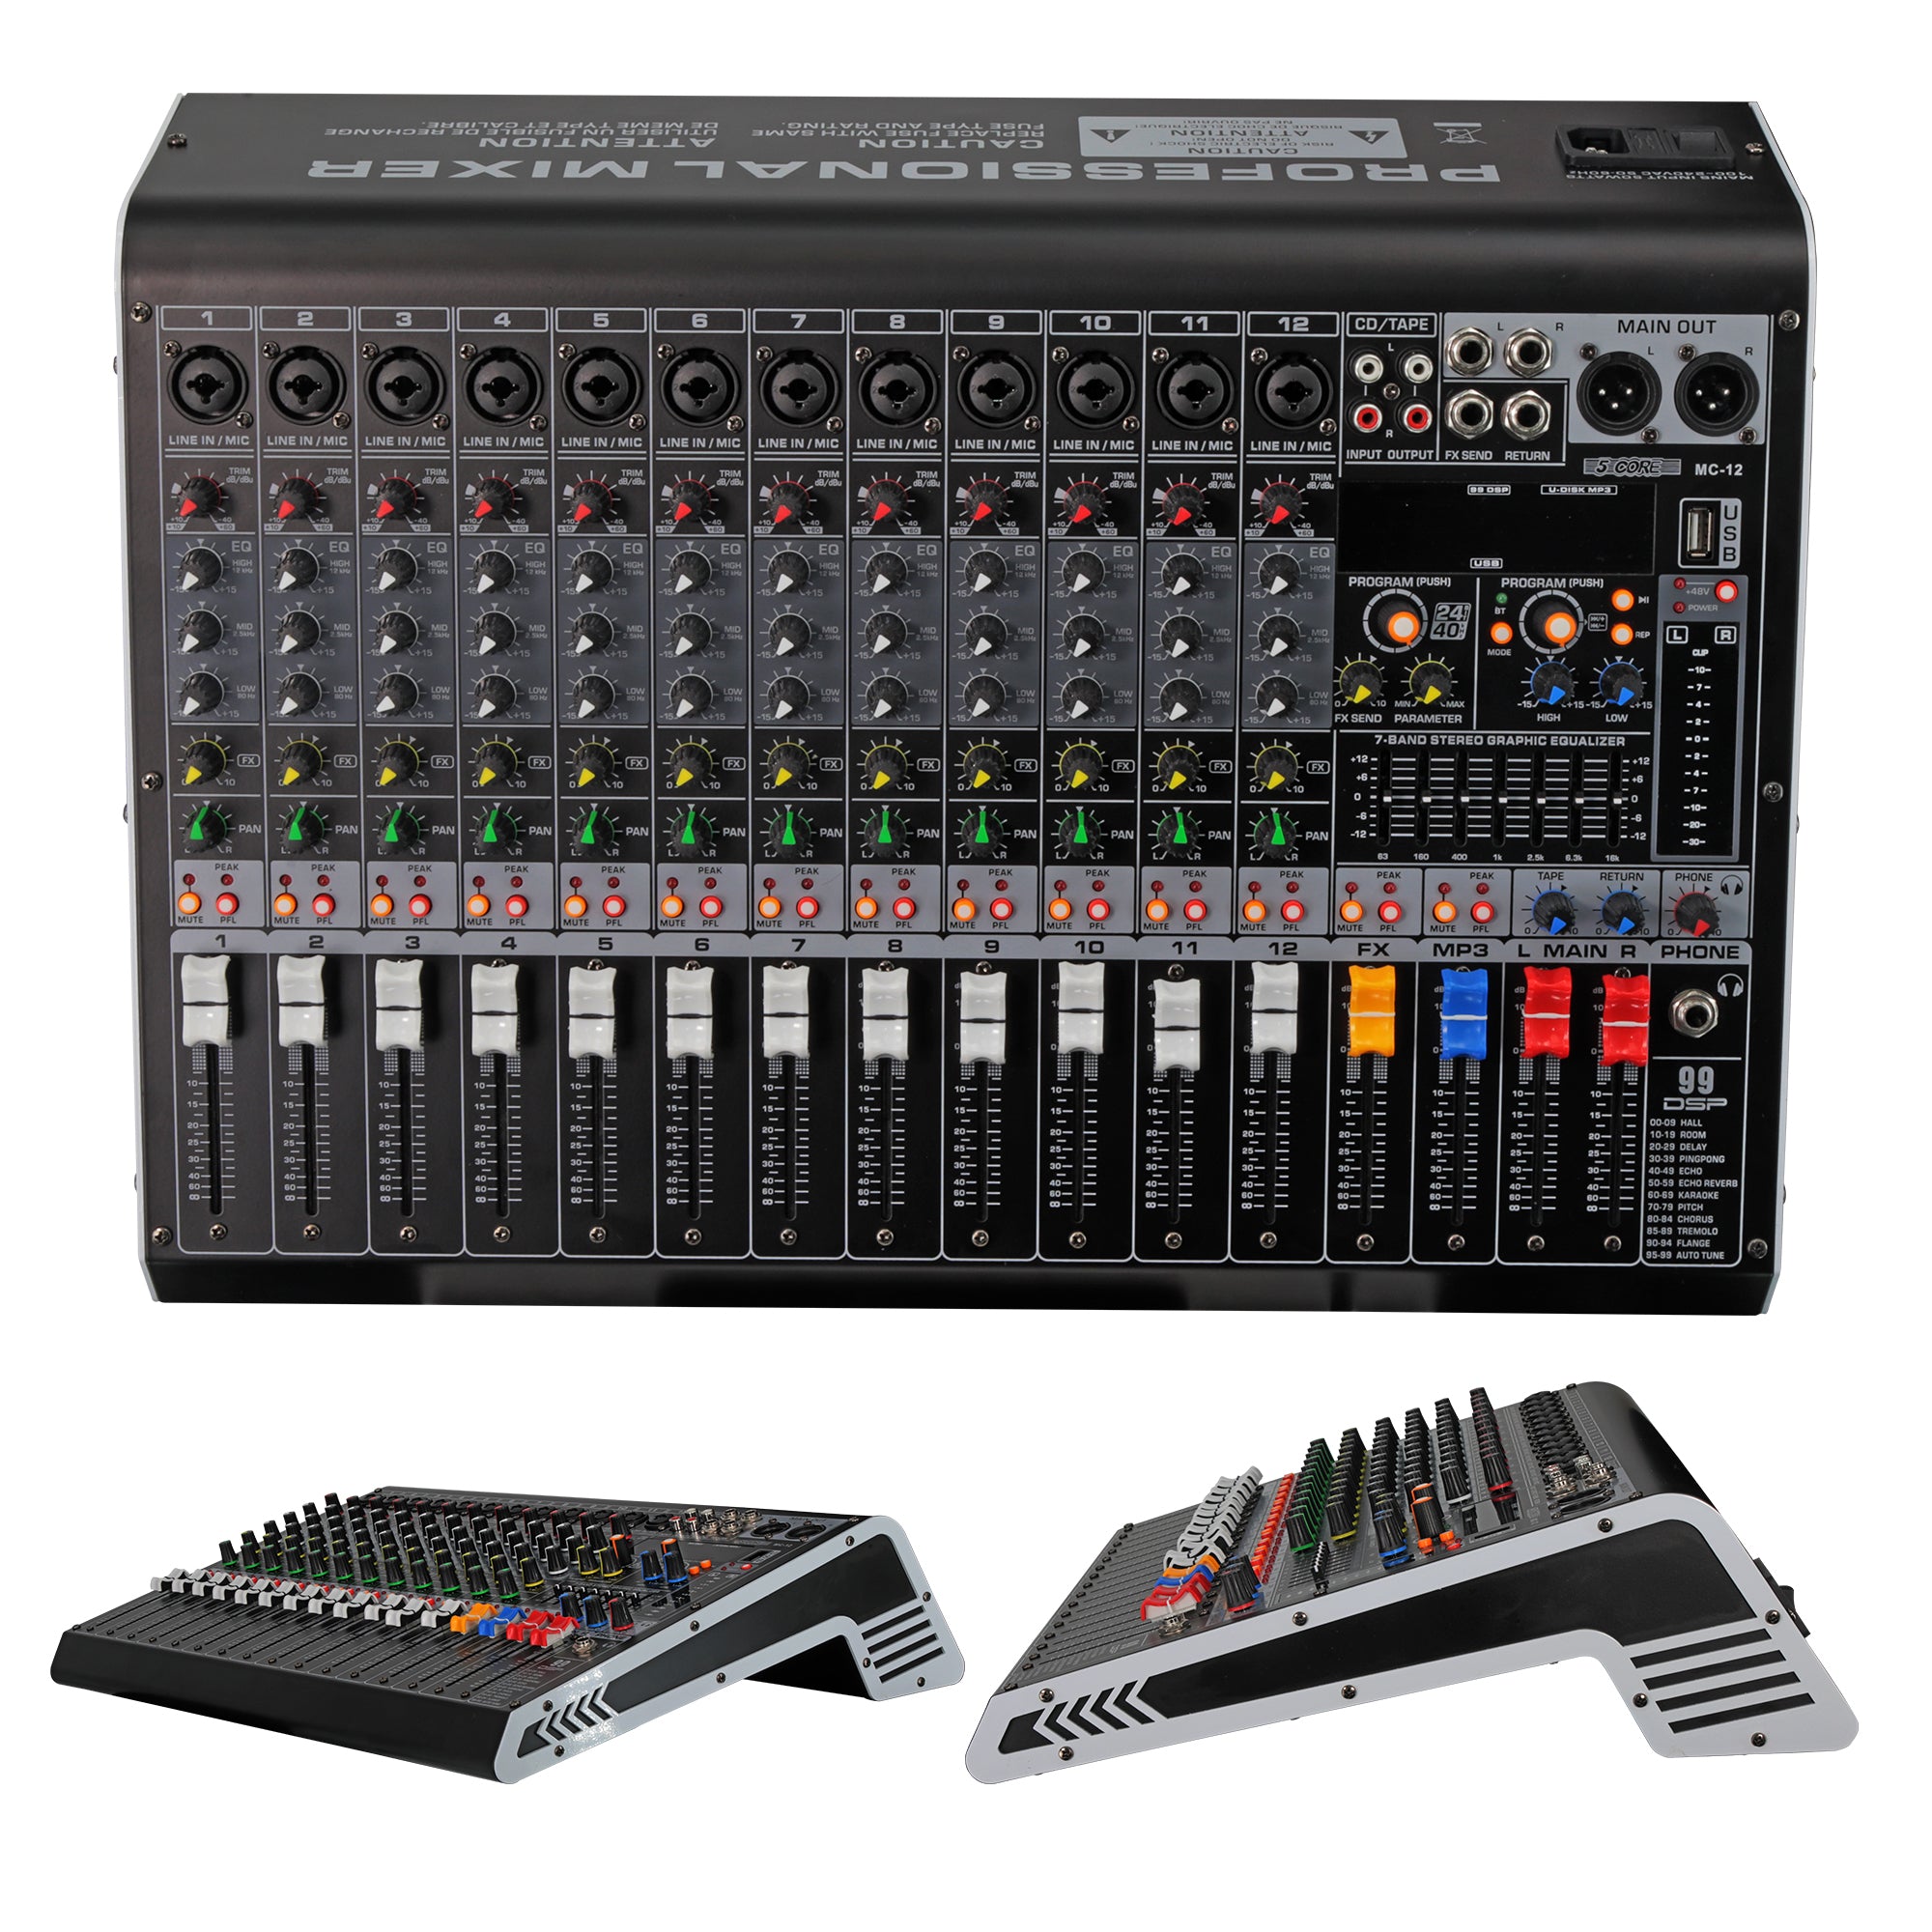 5 Core Audio Mixer 12 Channel DJ Equipment Digital Sound Board Karaoke XLR Mixers Professional Bluetooth USB Interface w Effects for Recording Music Studio PC Podcast Instrument Consola DJ - MX 12CH L